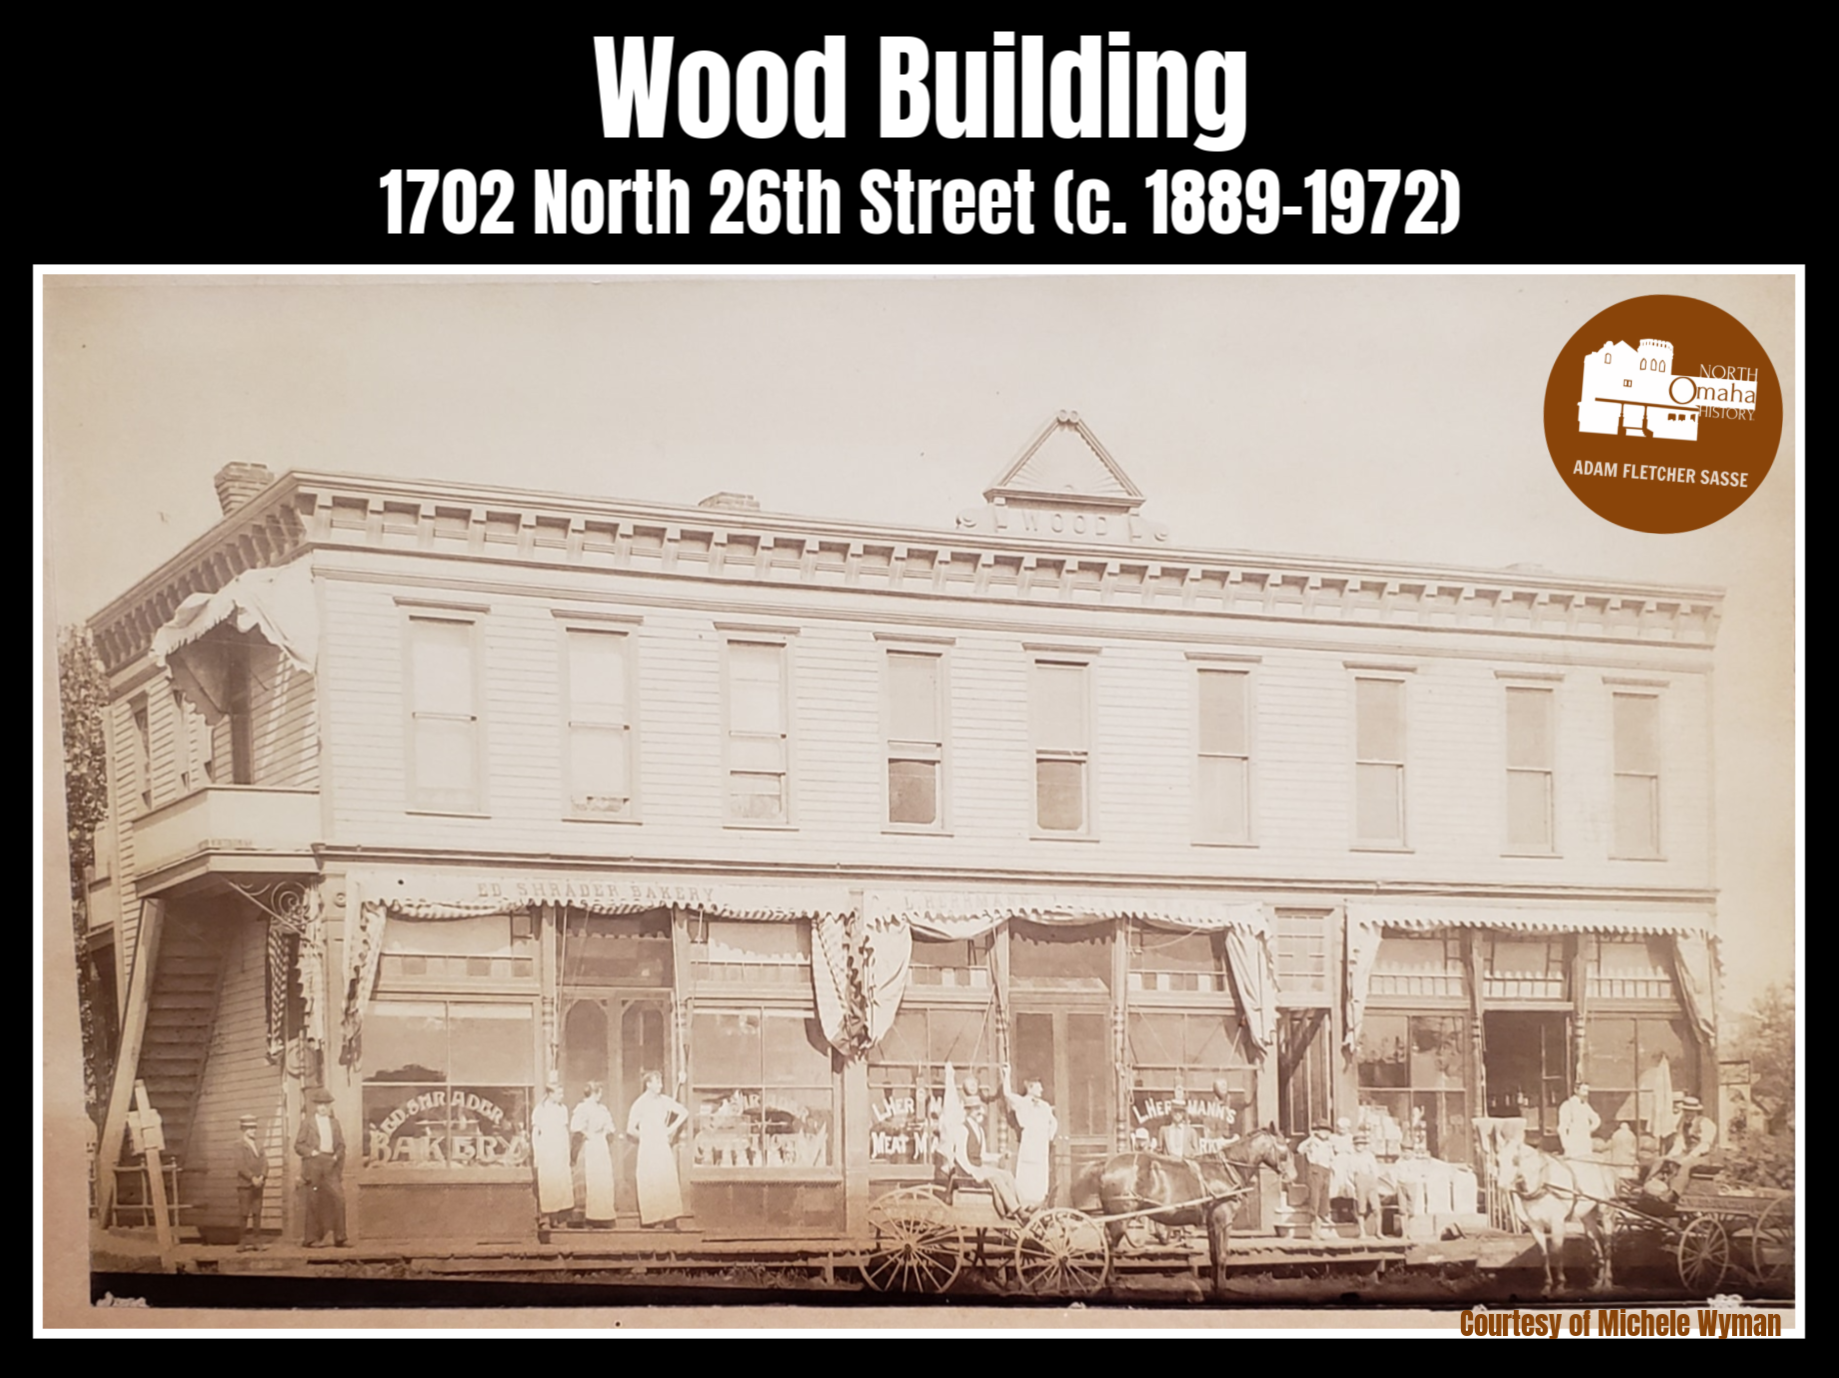 Wood Building, 1702 North 26th Street, North Omaha, Nebraska